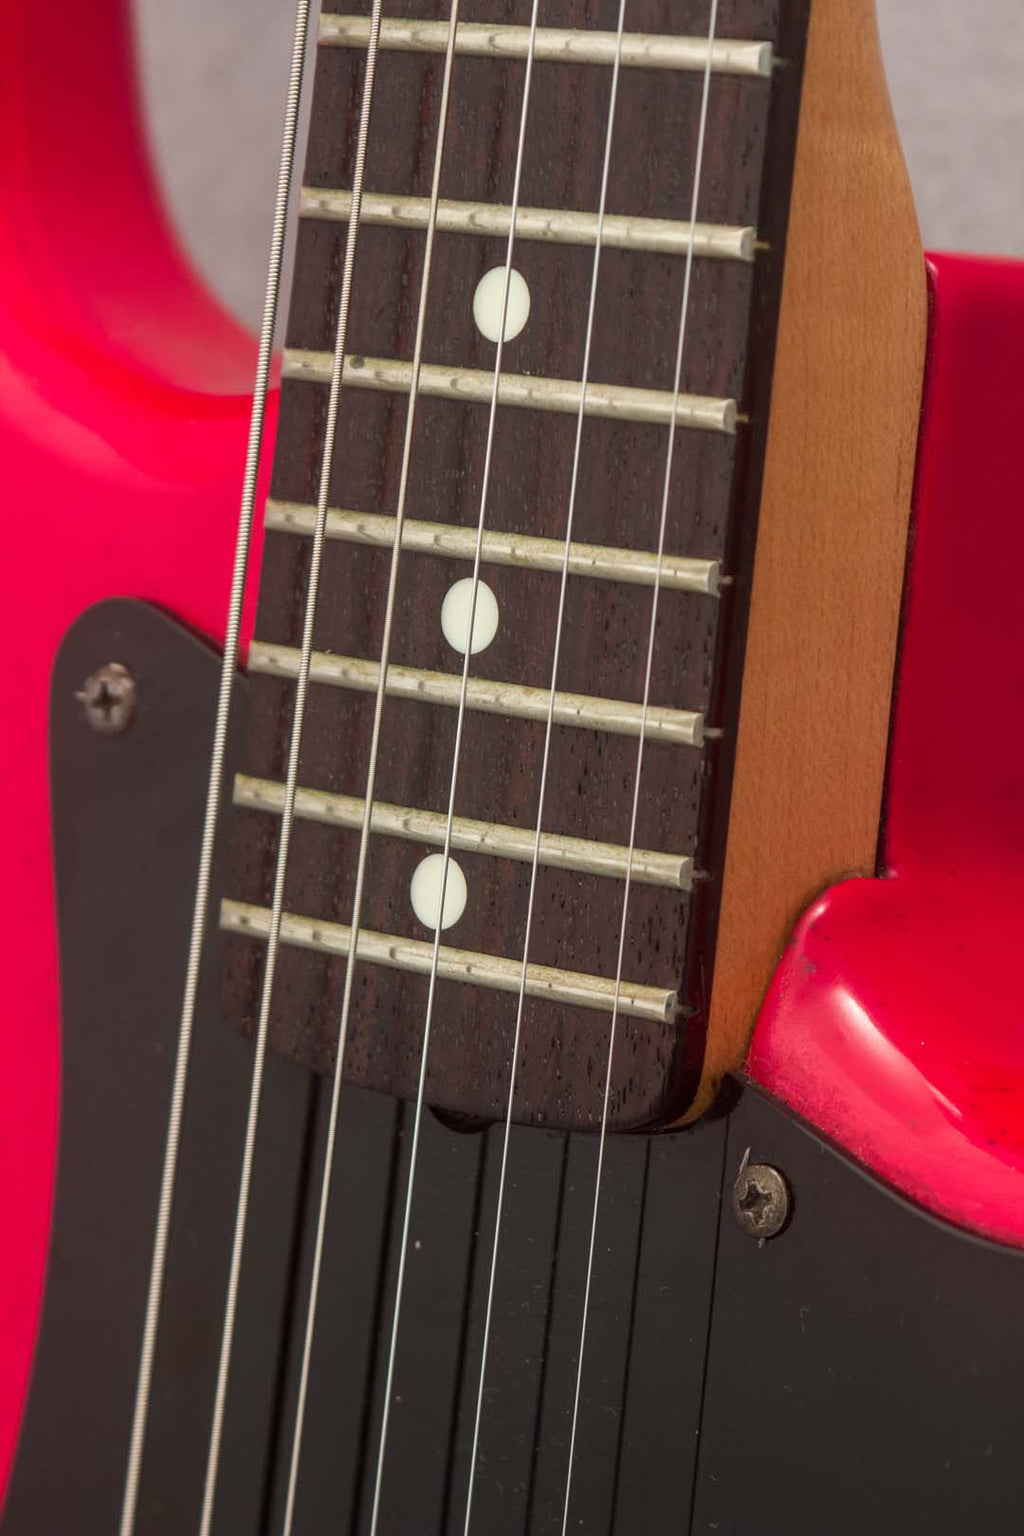 Squier MIJ Stratocaster SST331 Torino Red 1985